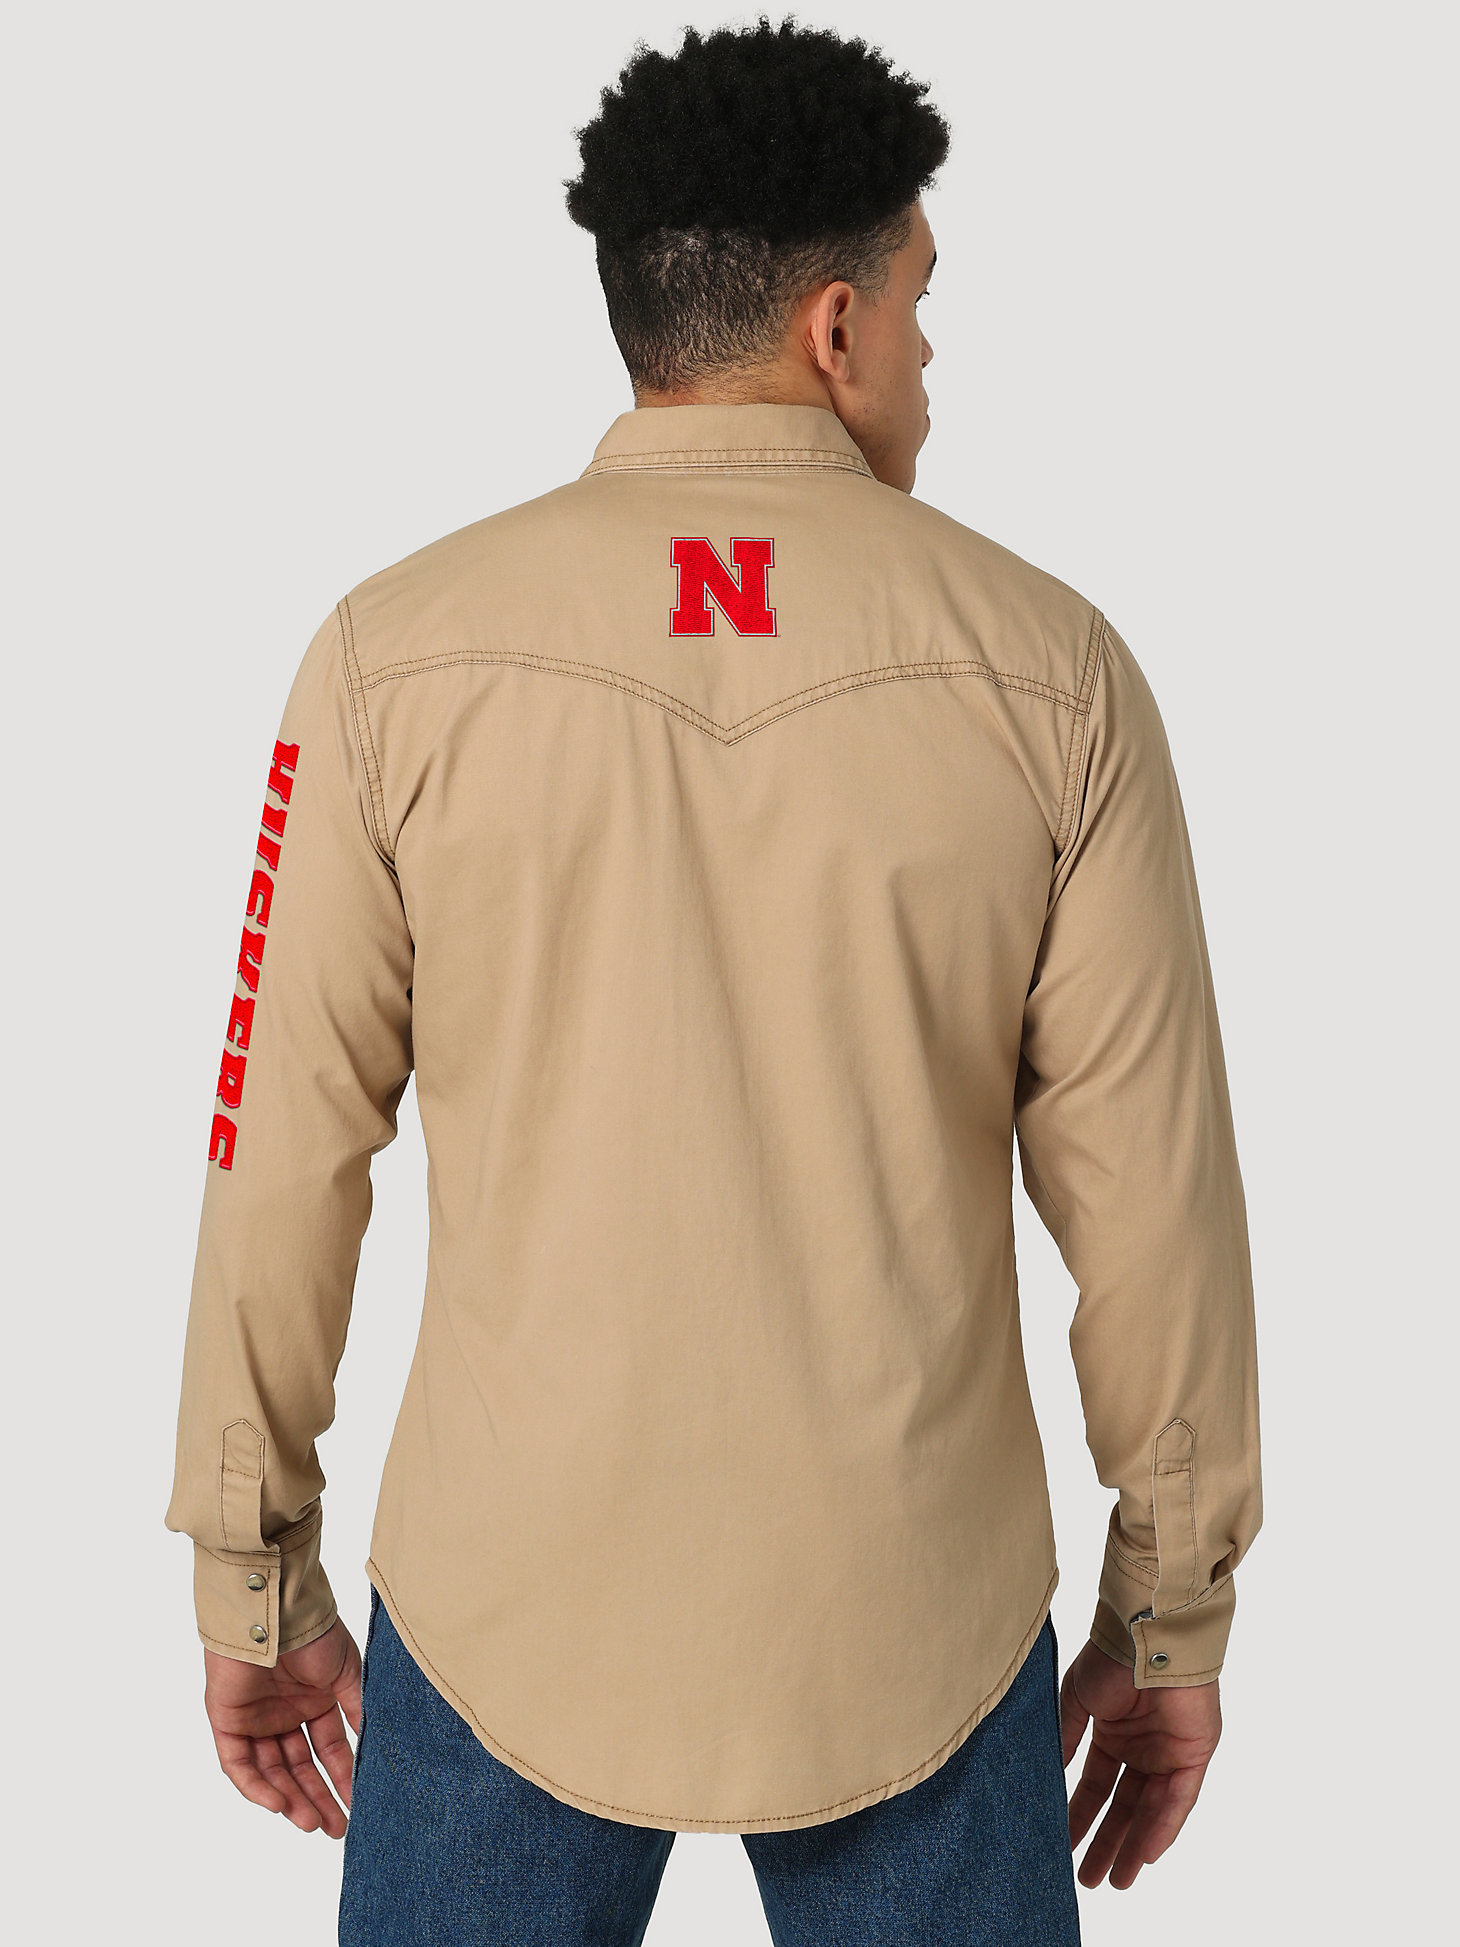 Wrangler Collegiate Embroidered Twill Western Snap Shirt in University of Nebraska alternative view 1